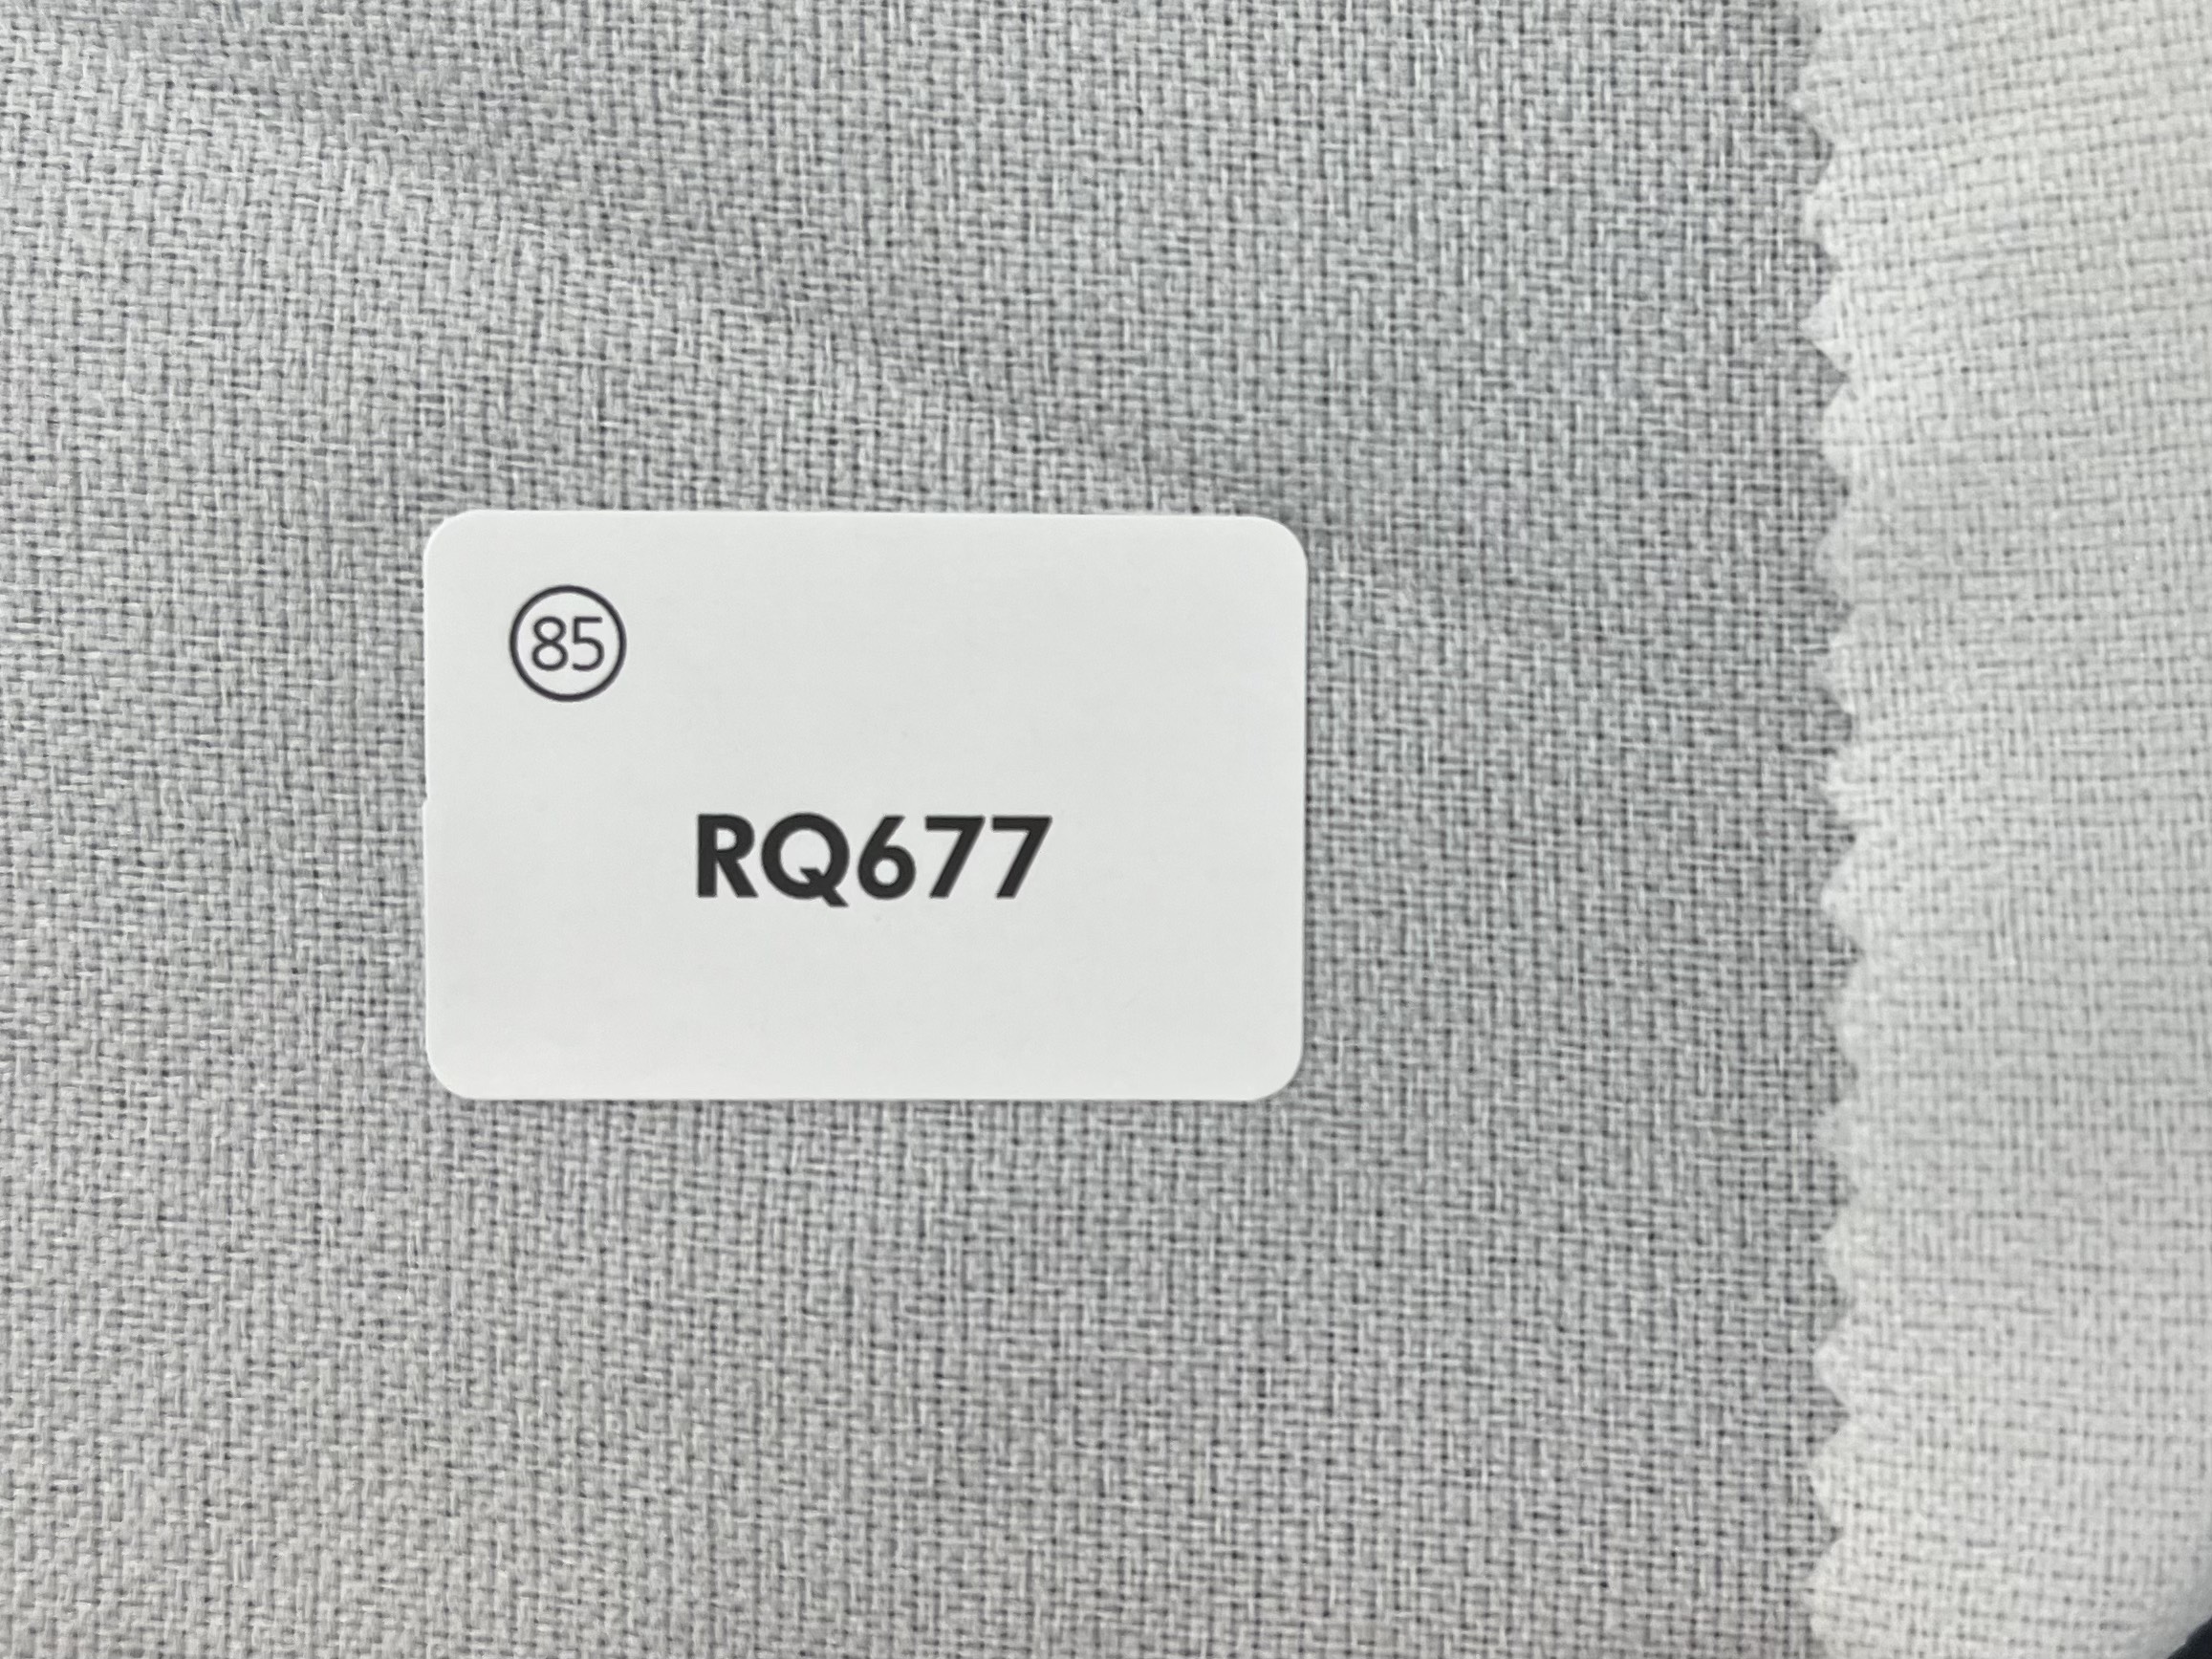 RQ677